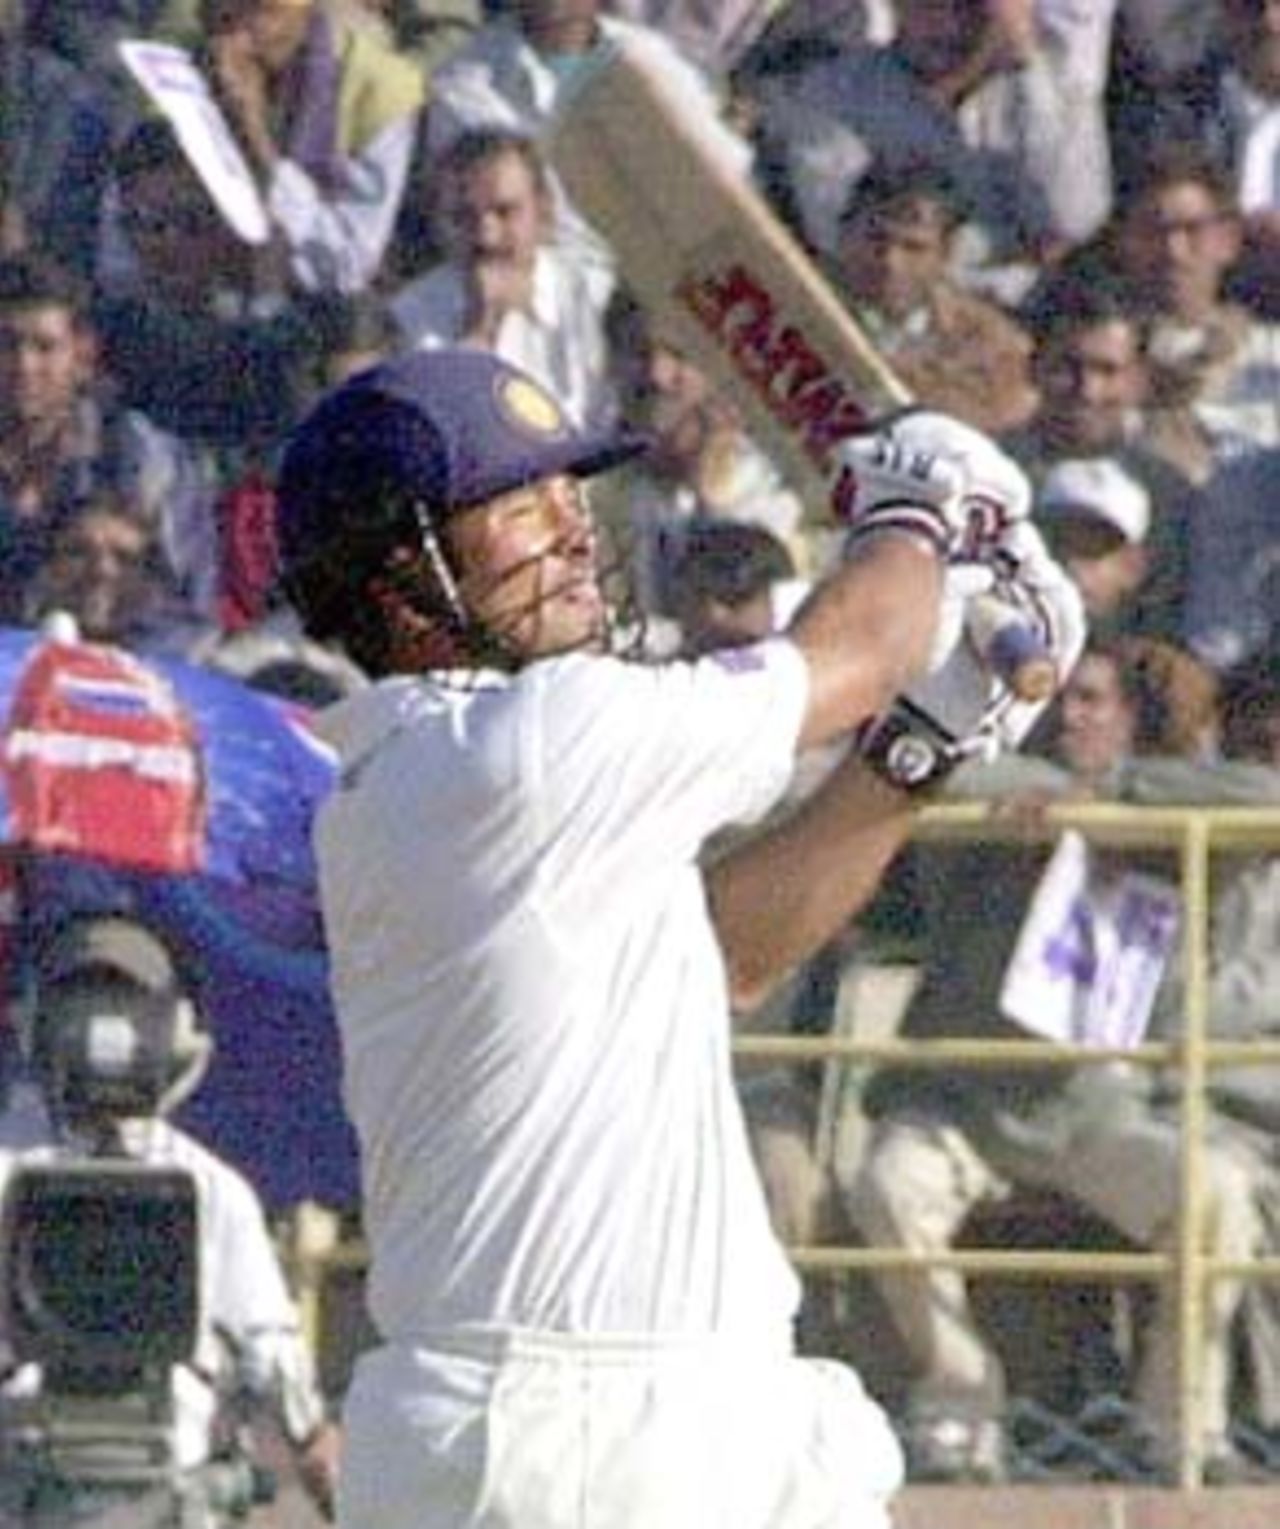 Indian ace Sachin Tendulkar hits a six off Zimbabwean bowler Travis Friend during the third one-day international cricket match in Jodhpur, 08 December 2000. Tendulkar hit 146 off 153 balls as India piled up 283-8 from 50 overs in the match against Zimbabwe.